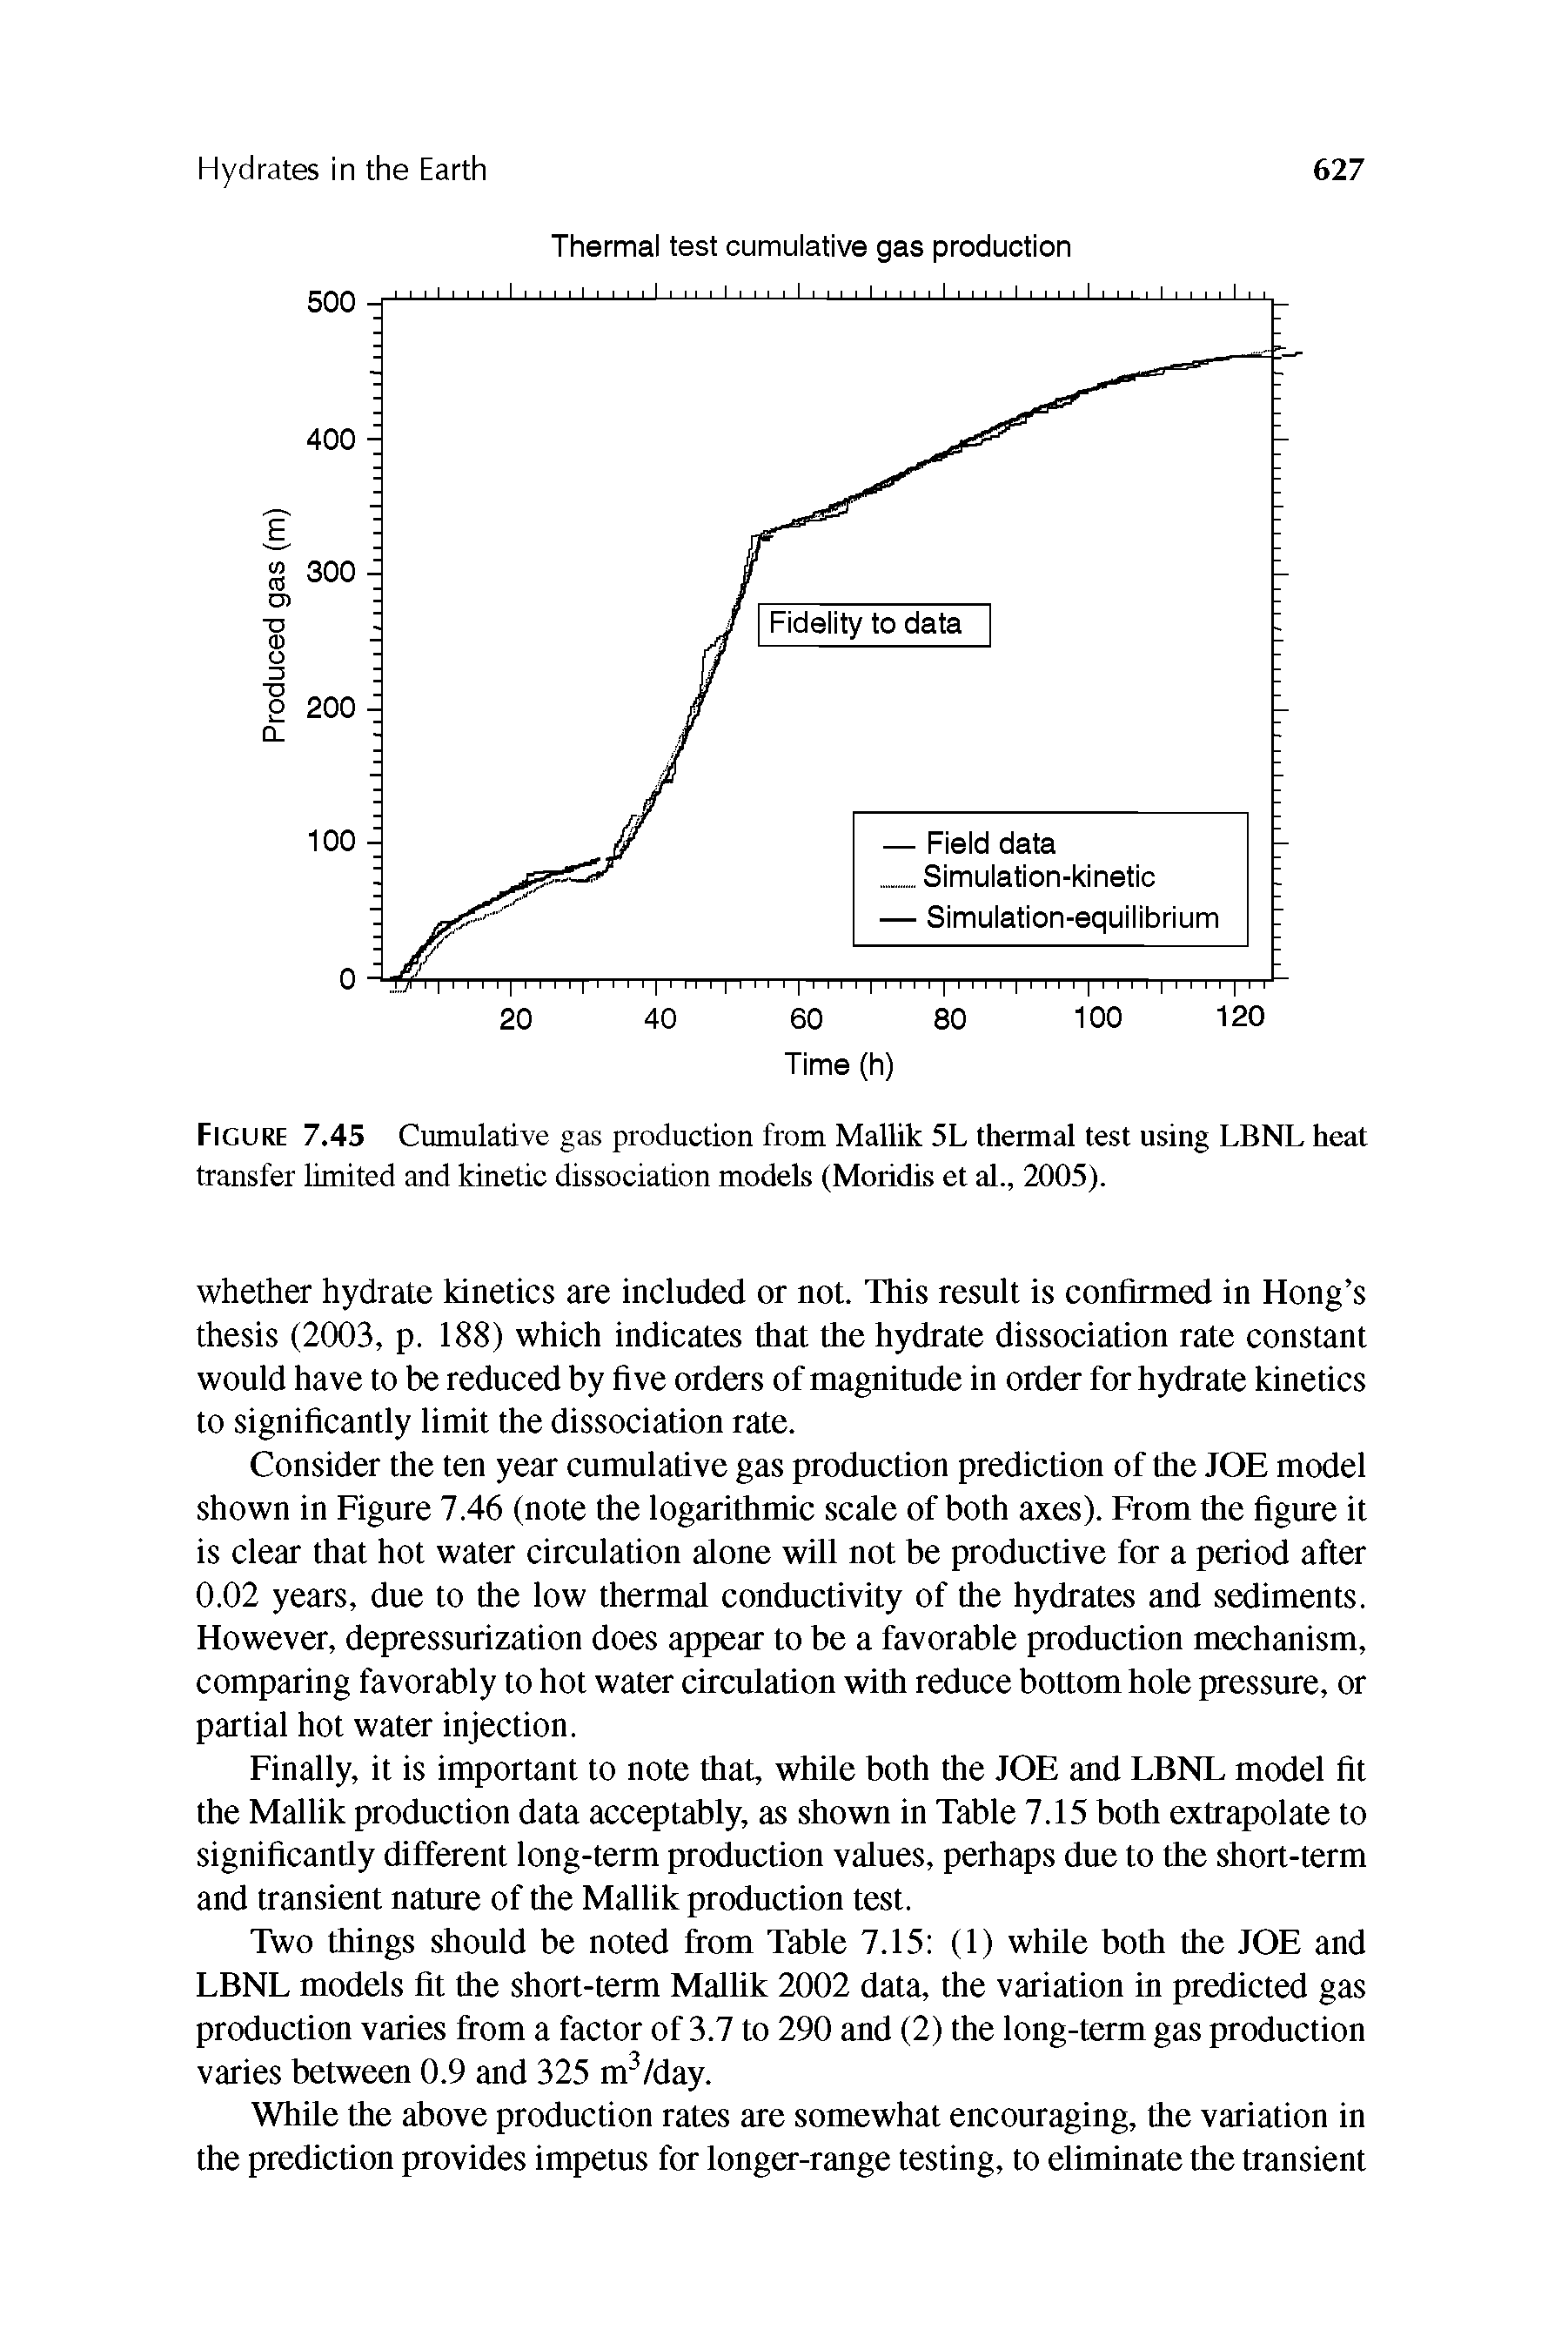 Figure 7.45 Cumulative gas production from Mallik 5L thermal test using LBNL heat transfer limited and kinetic dissociation models (Moridis et al., 2005).